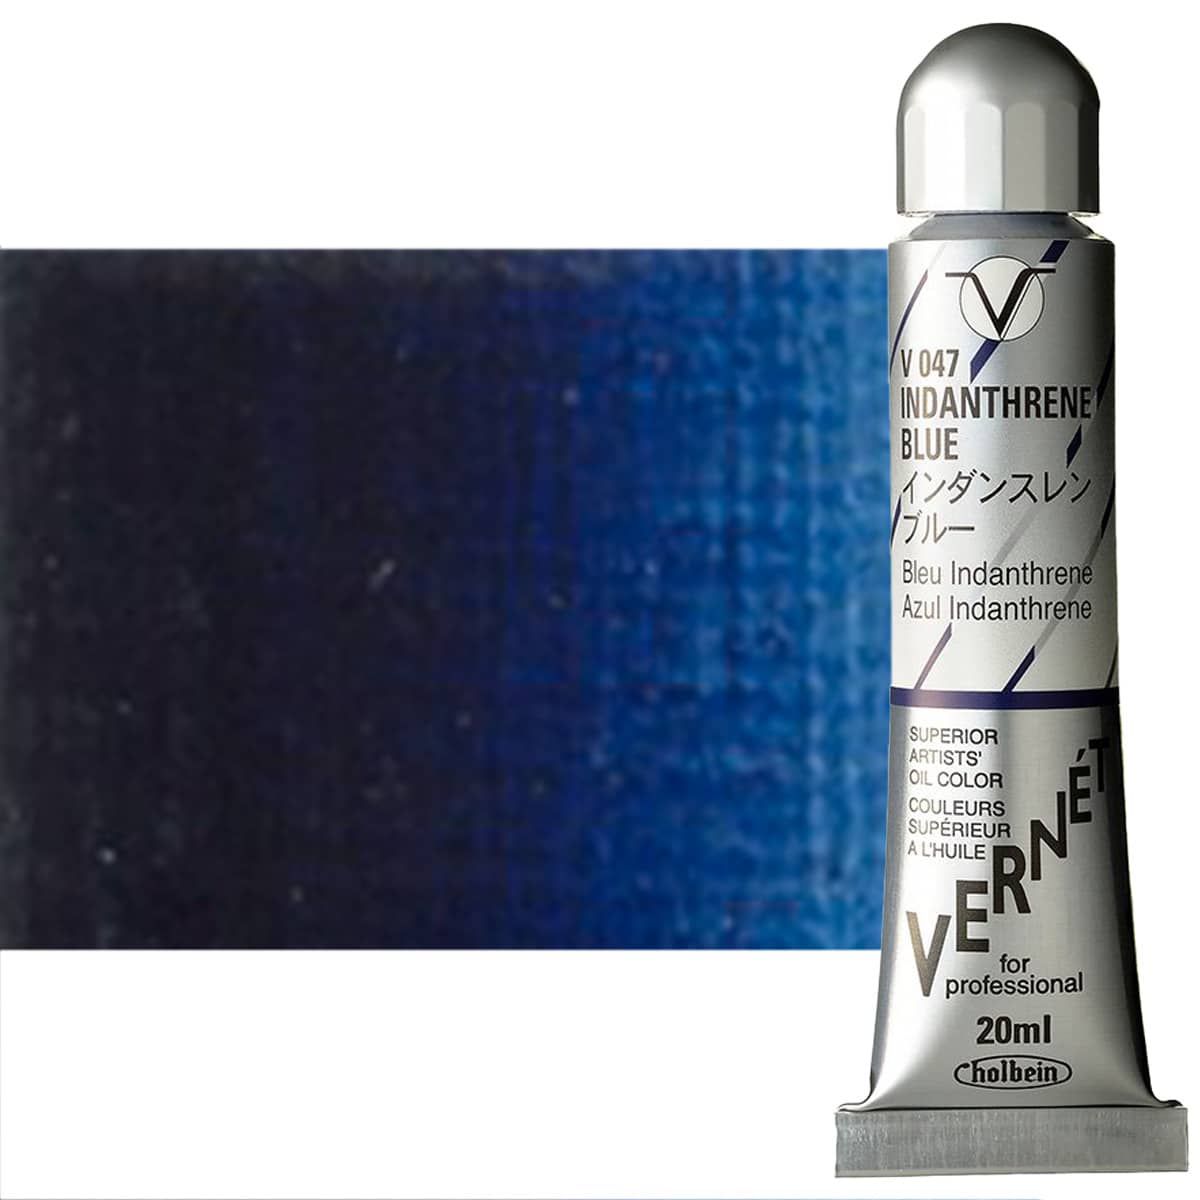 Holbein Vern?t Oil Color 20 ml Tube - Indanthrene Blue